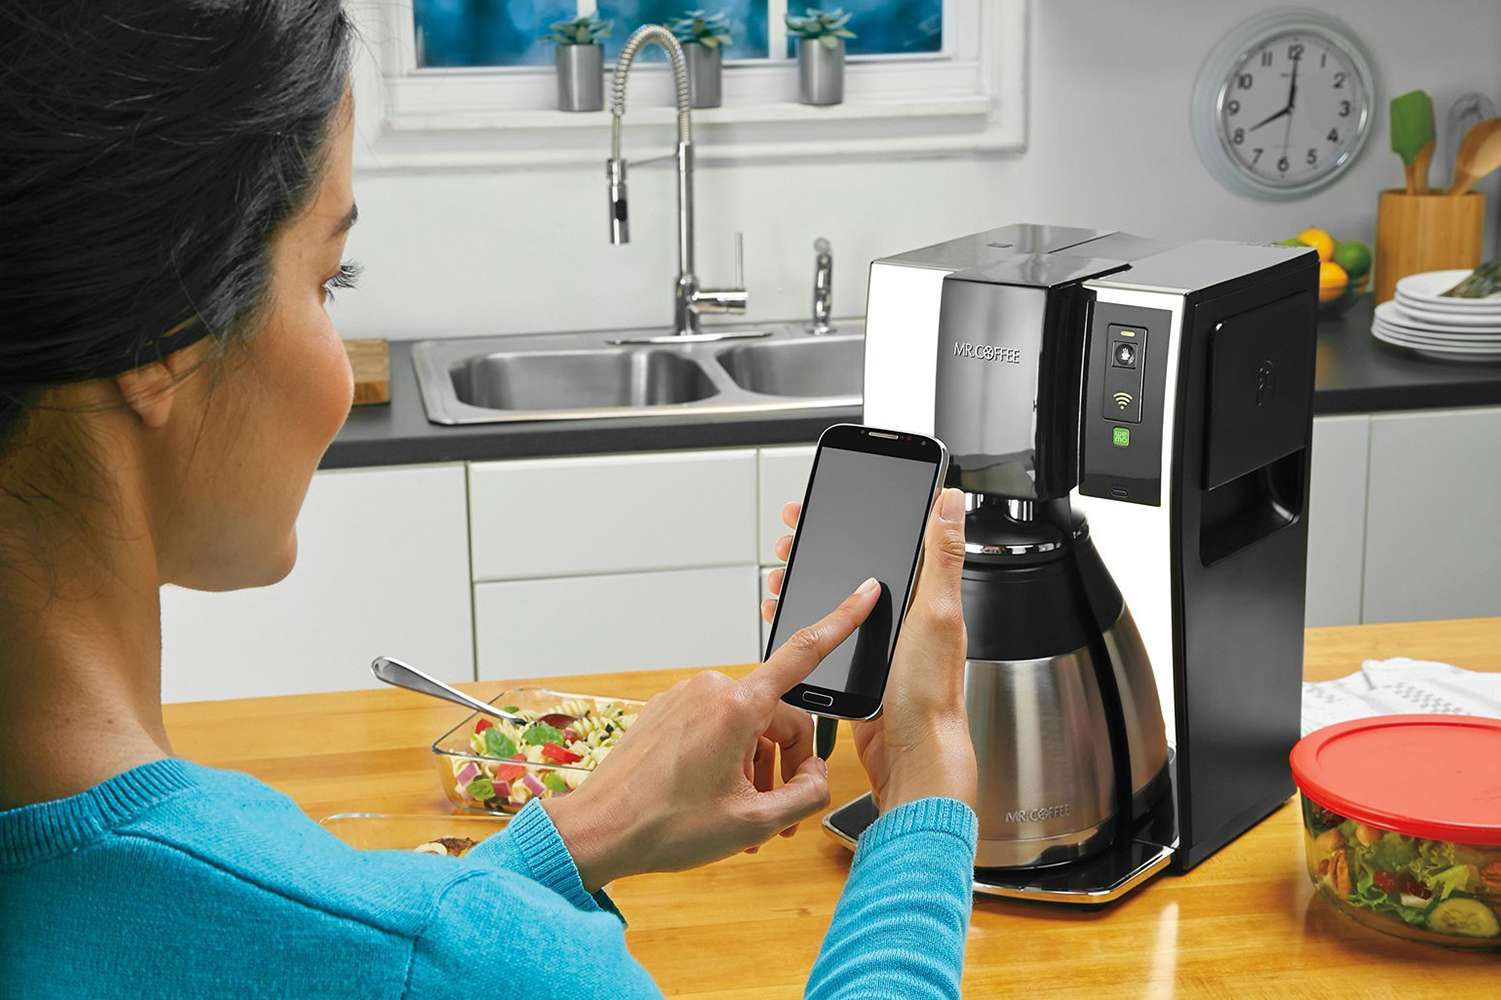 On our radar: The smart wireless Wi-Fi coffee machine from Smarter